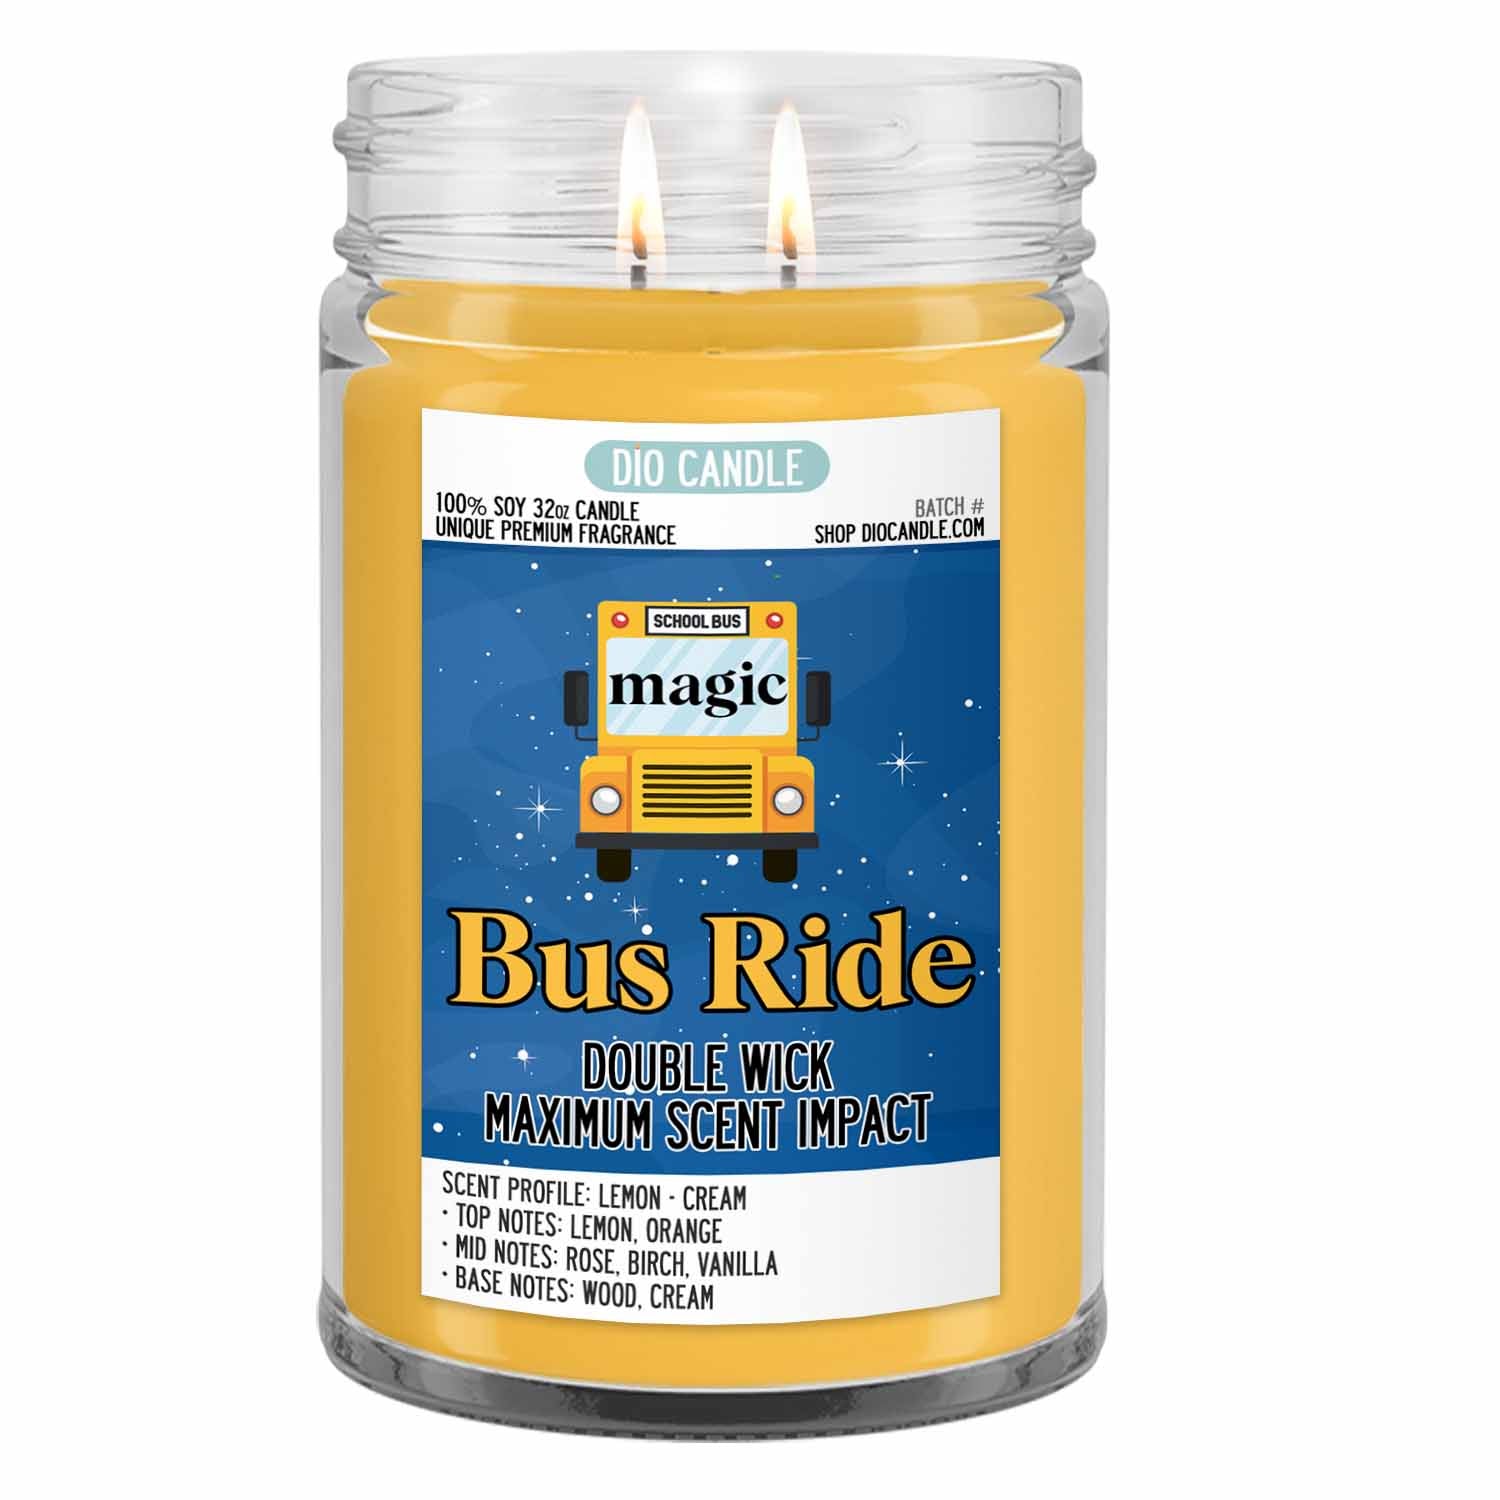 Magic Bus Candle